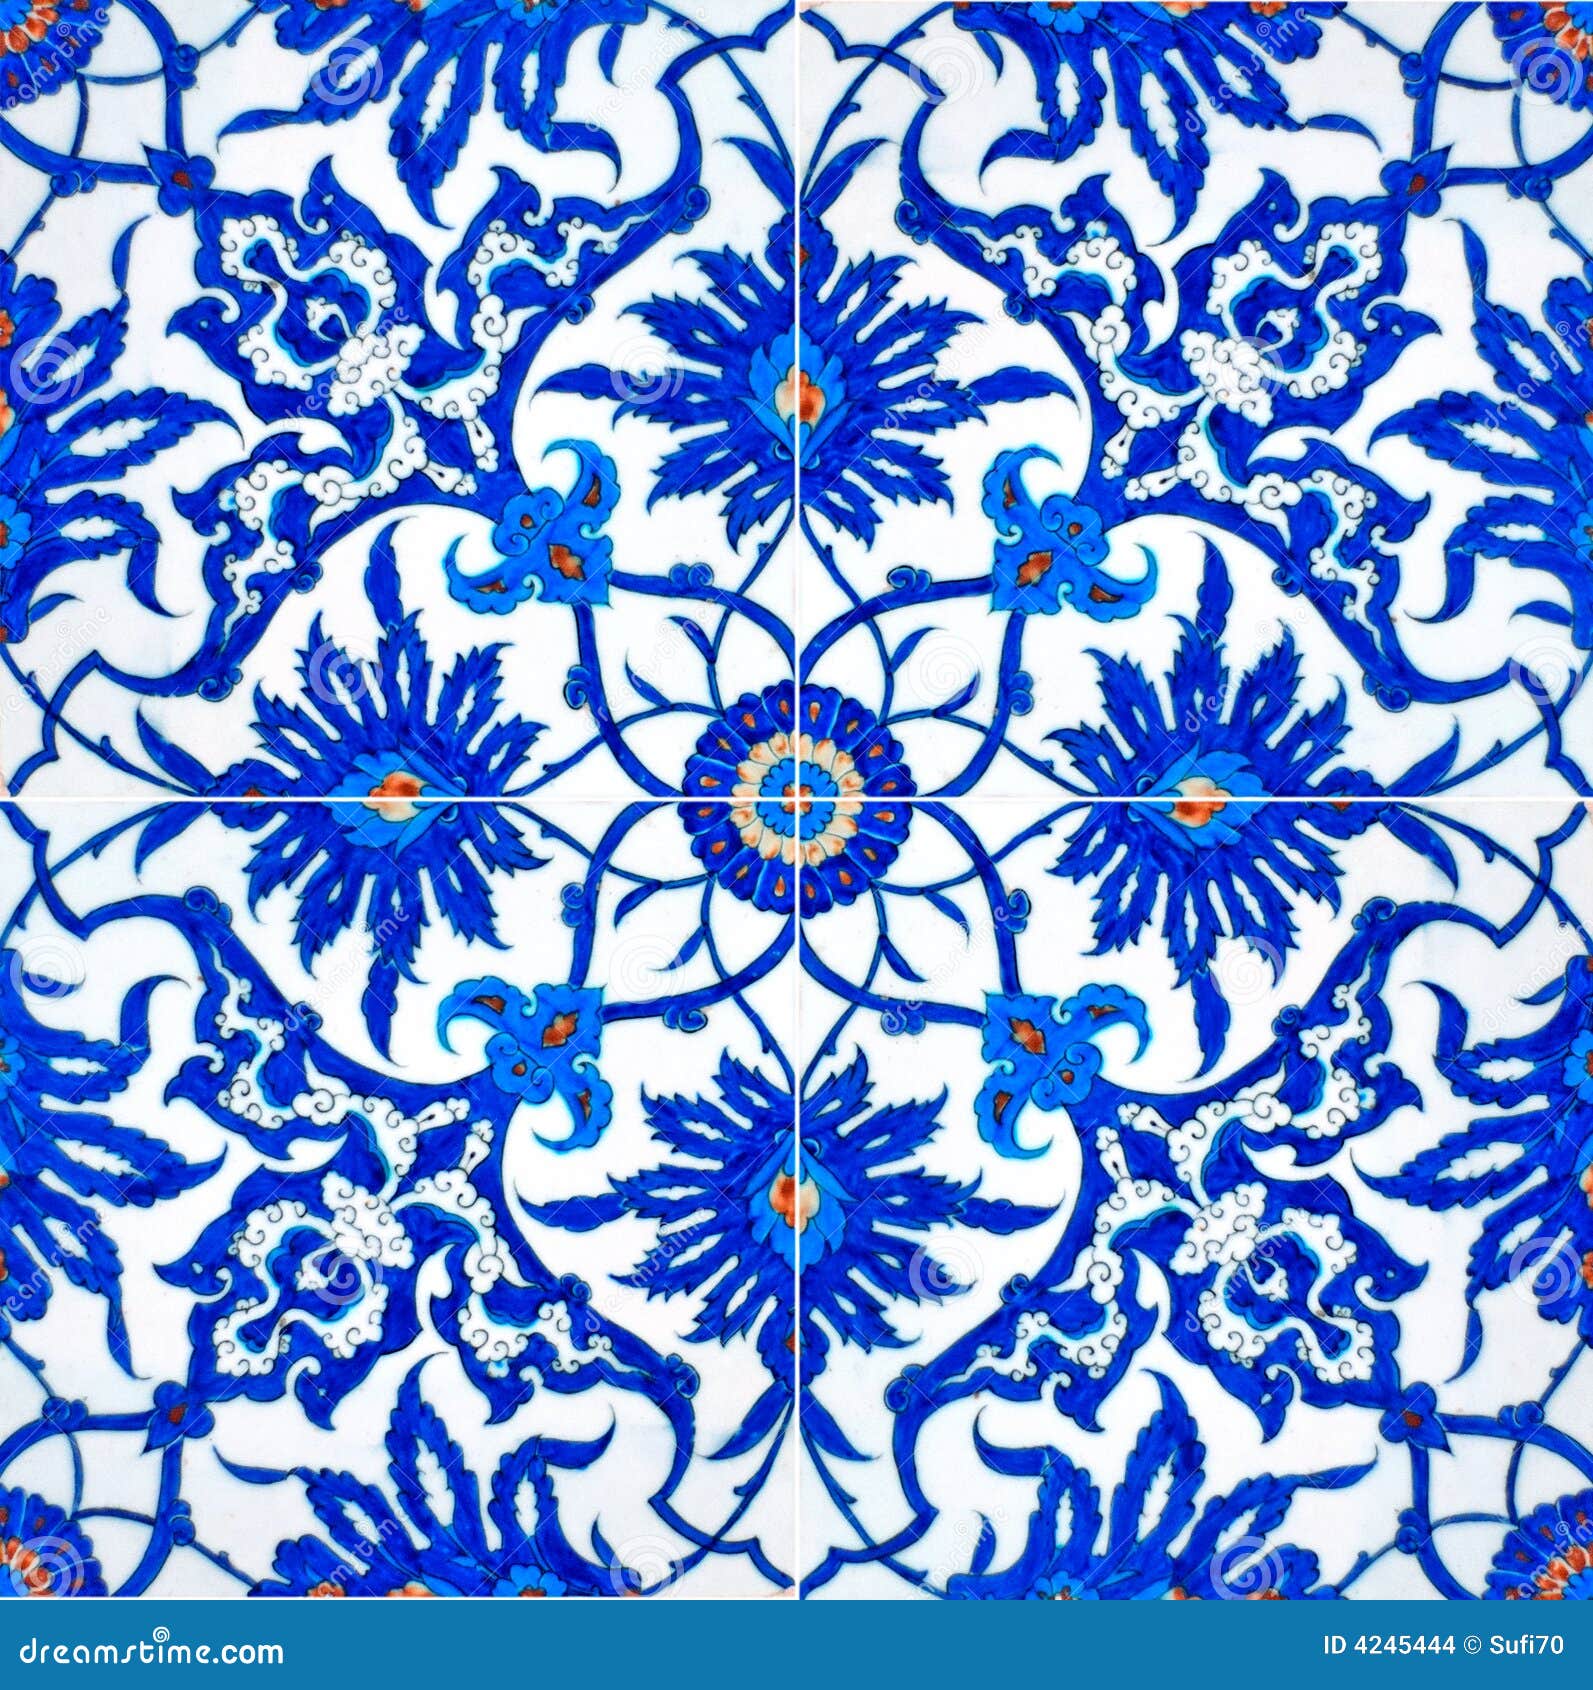 Photo of turkish tiles, found in Rustempasa Mosque, in Istanbul Turkey